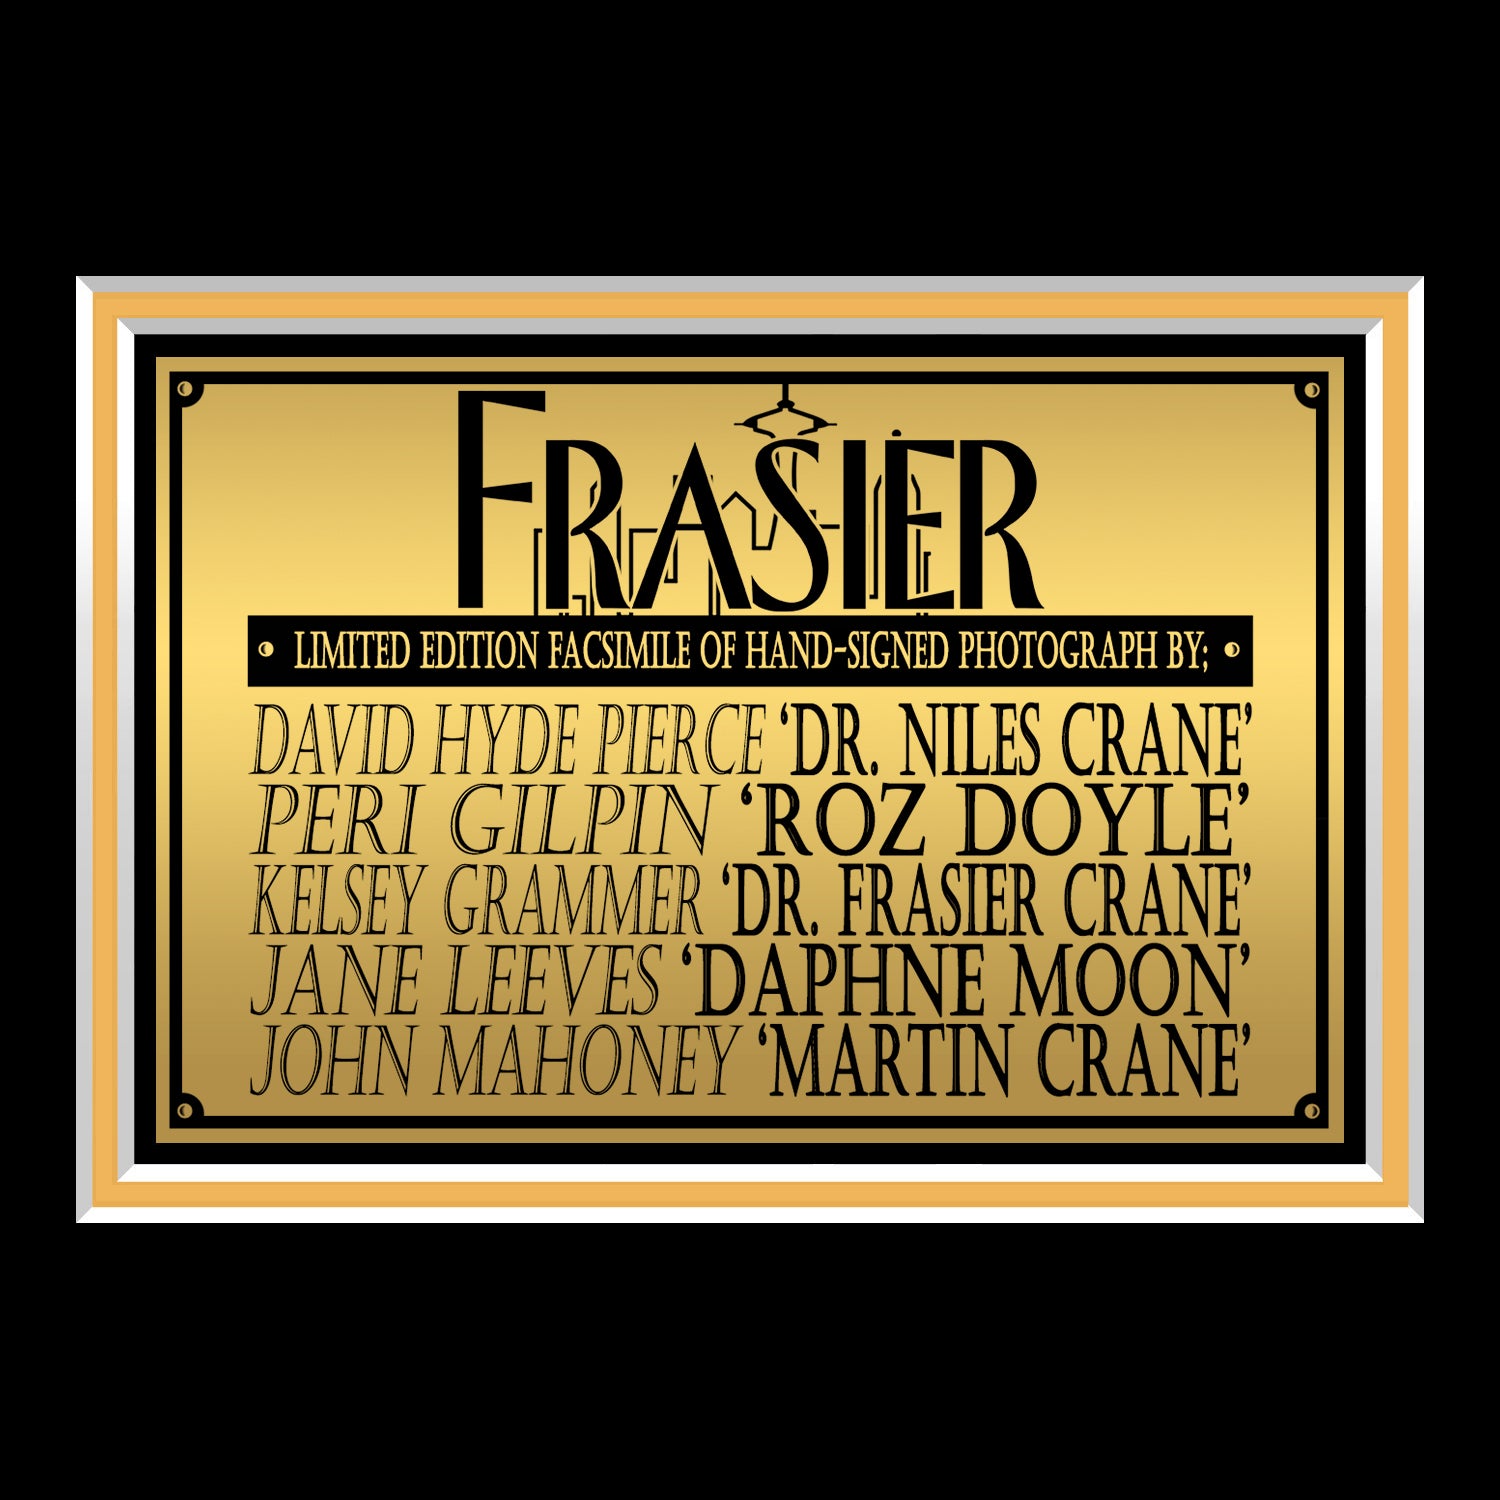 special edition frasier box set